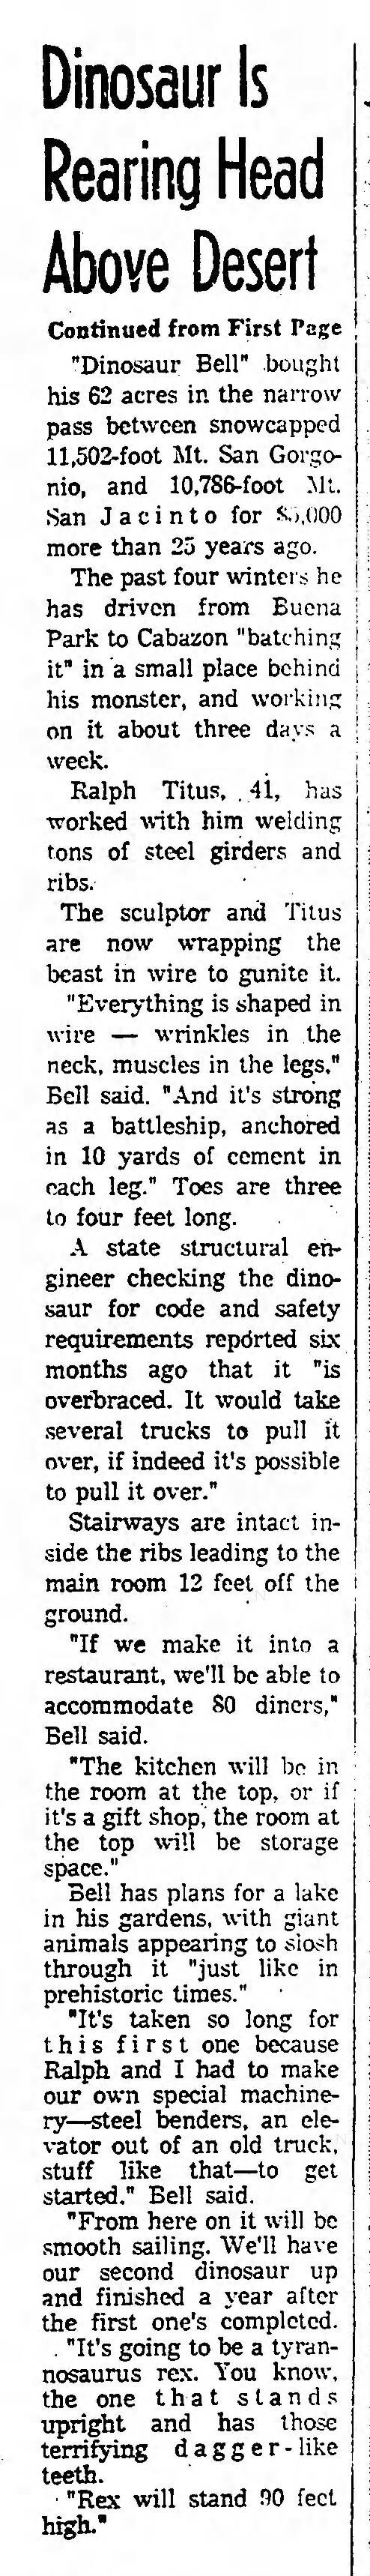 Dinosaurs, 1970